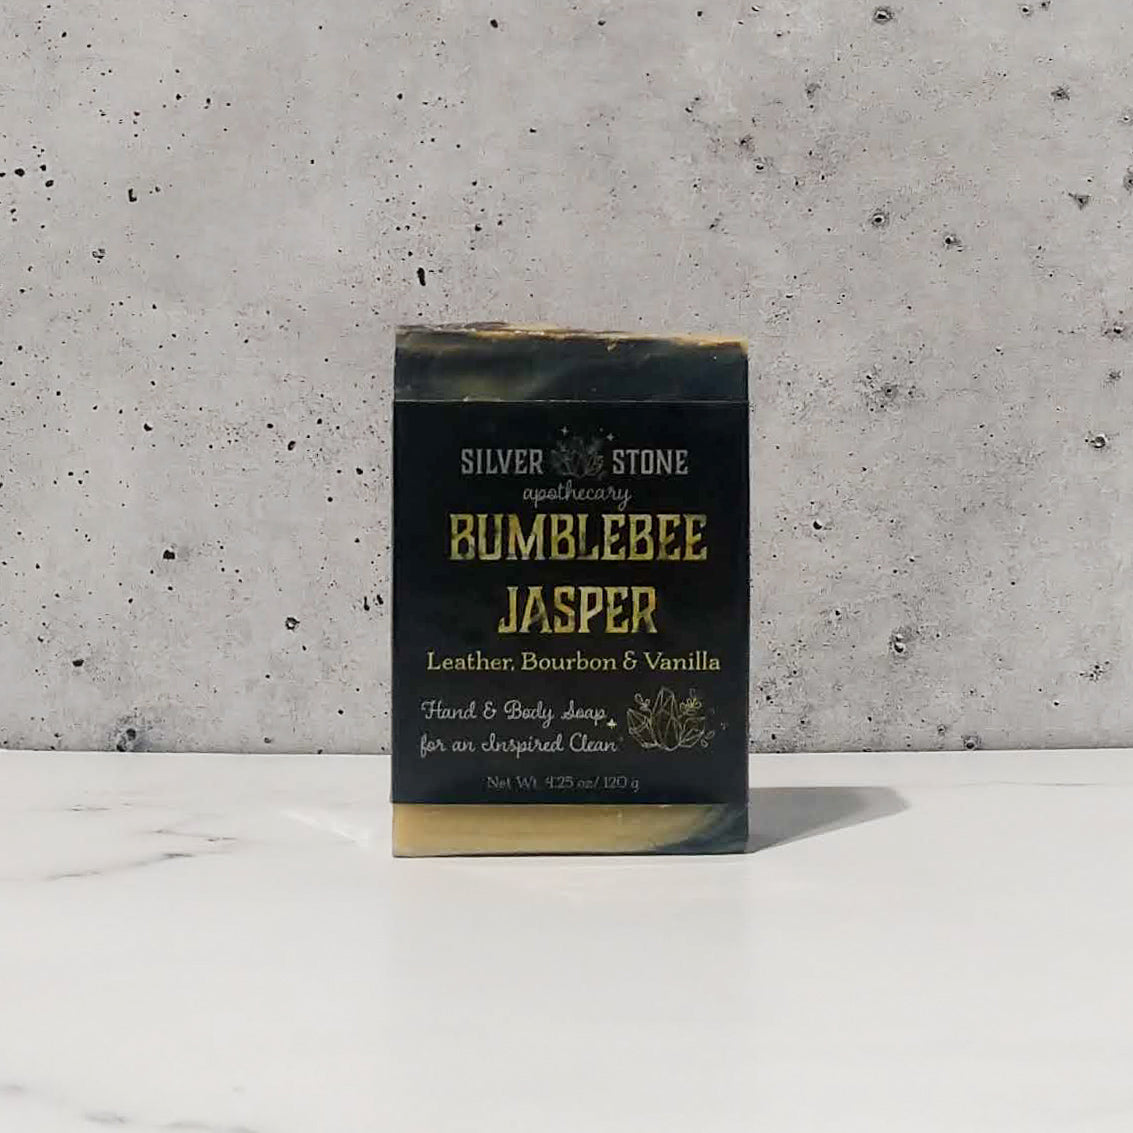 Bumblebee Jasper Hand and Body Soap